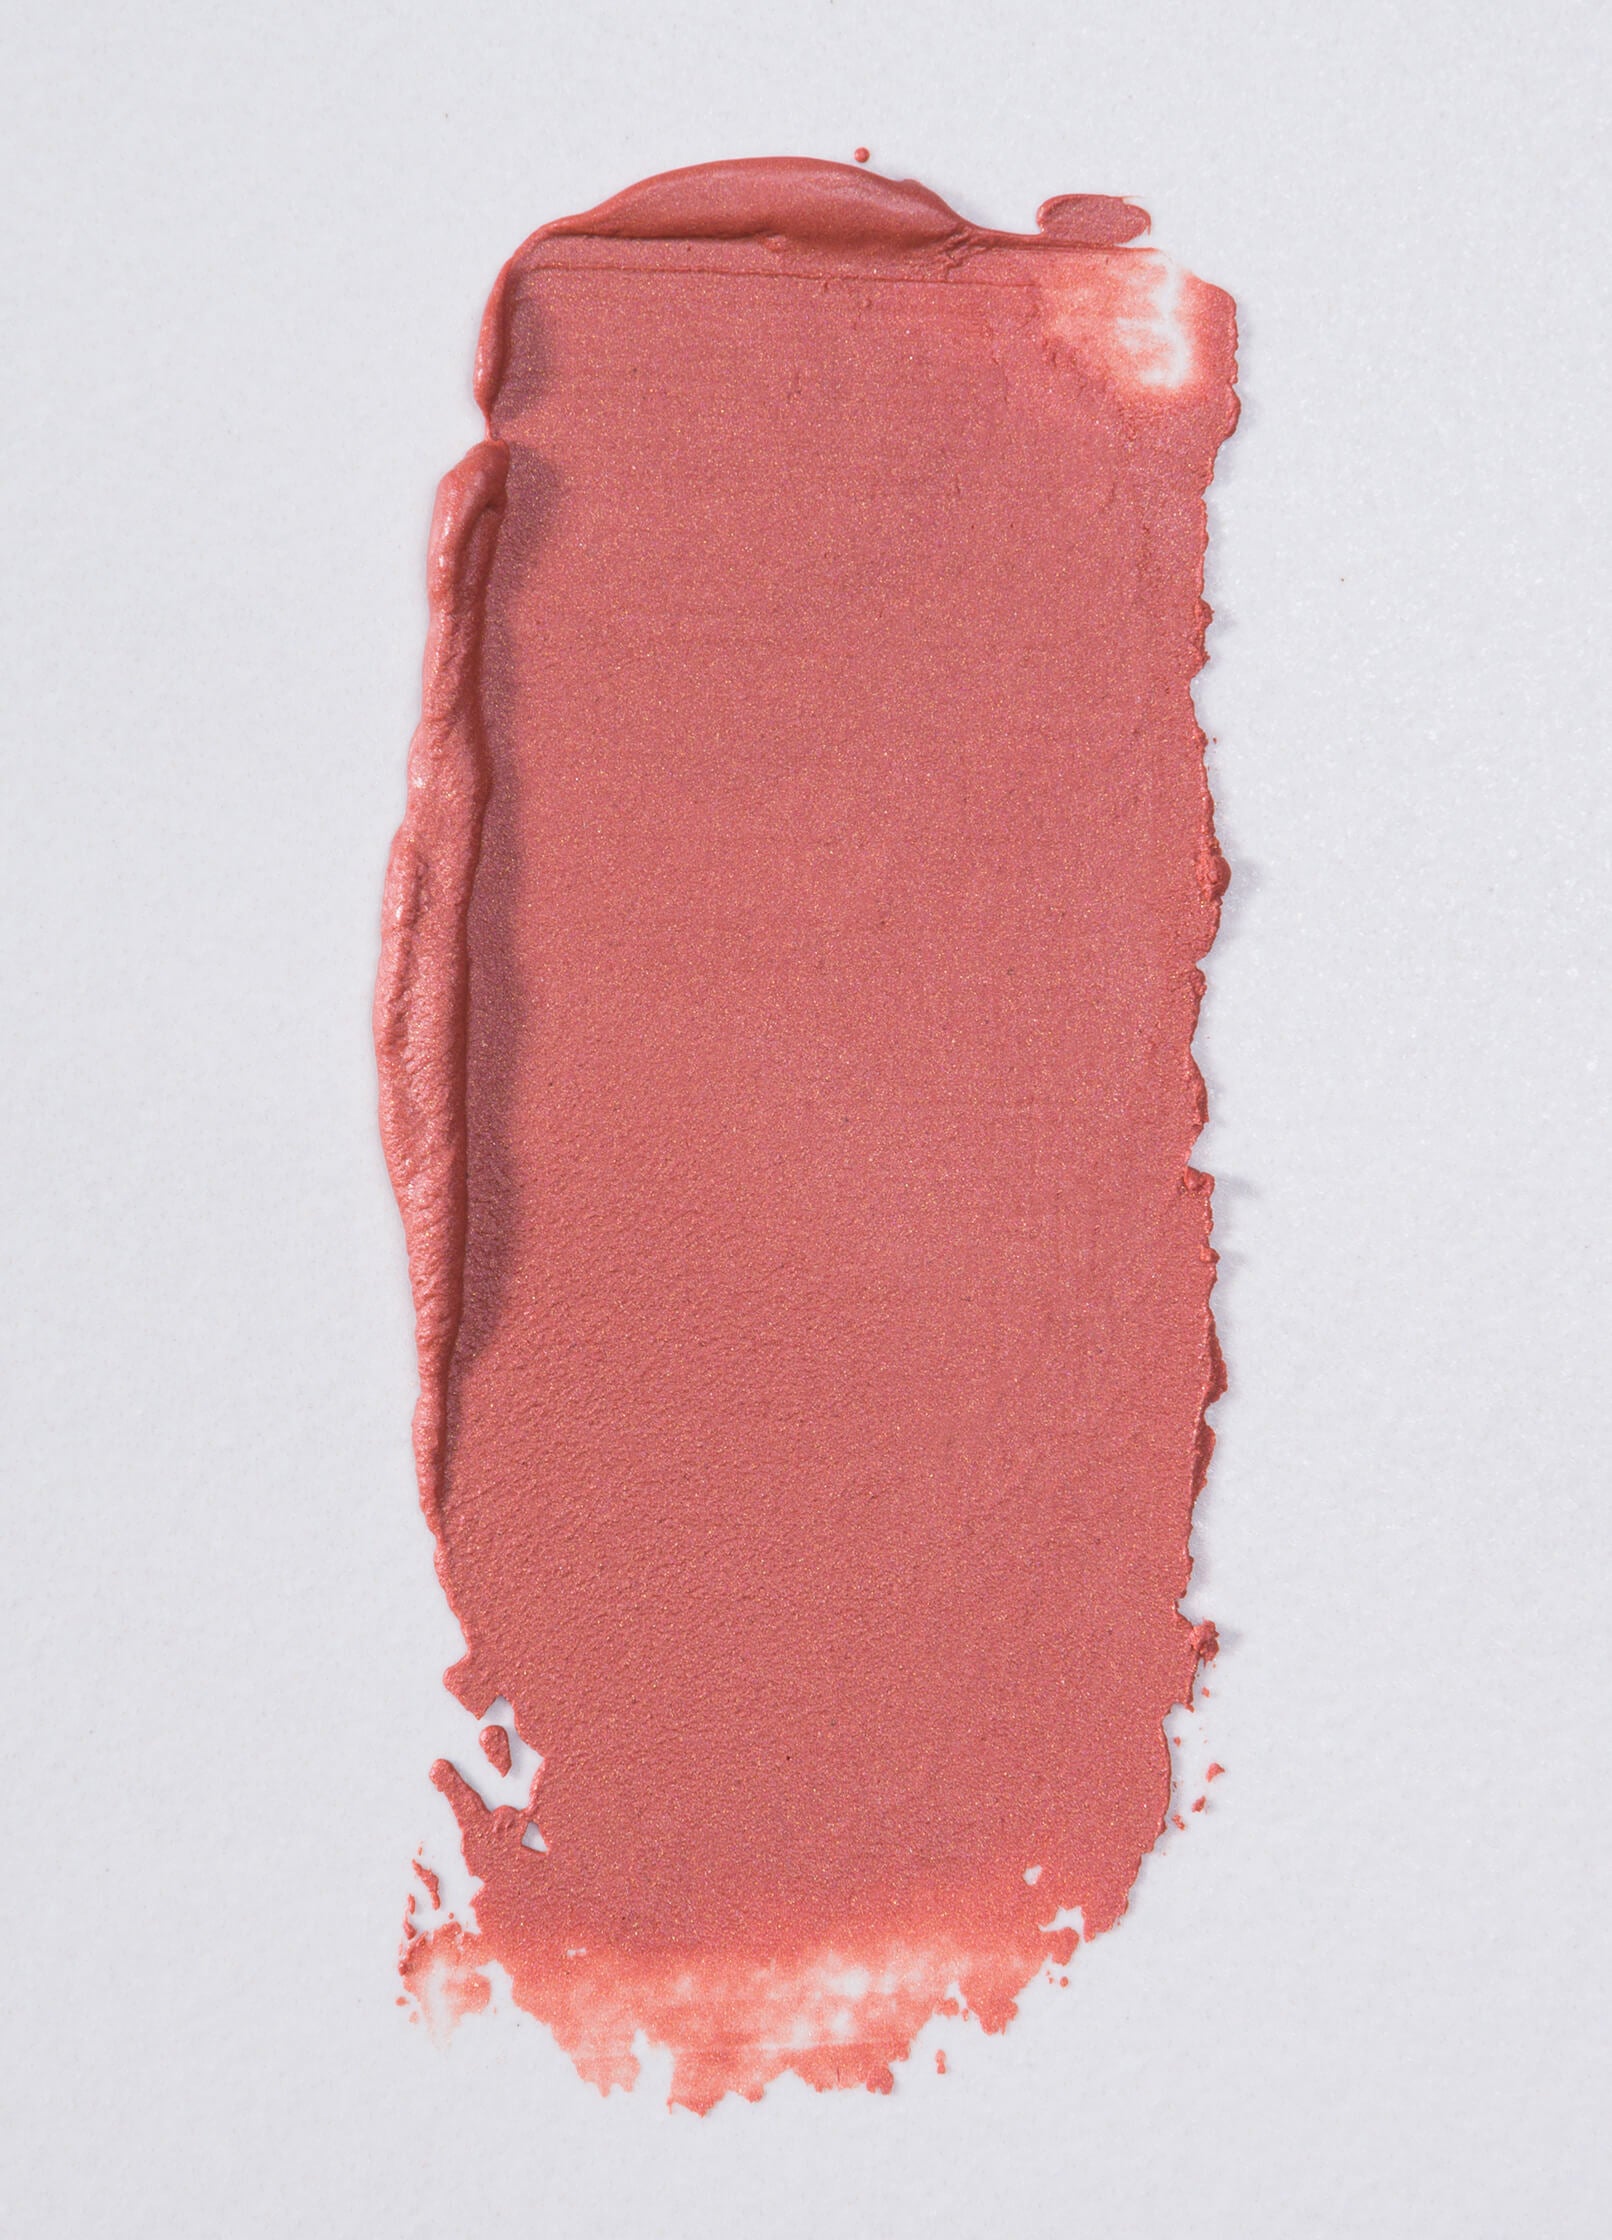 creme blush, cream blush vegan cruelty free refillable makeup #shade_Whimsy_|_Medium_Neutral_Pink